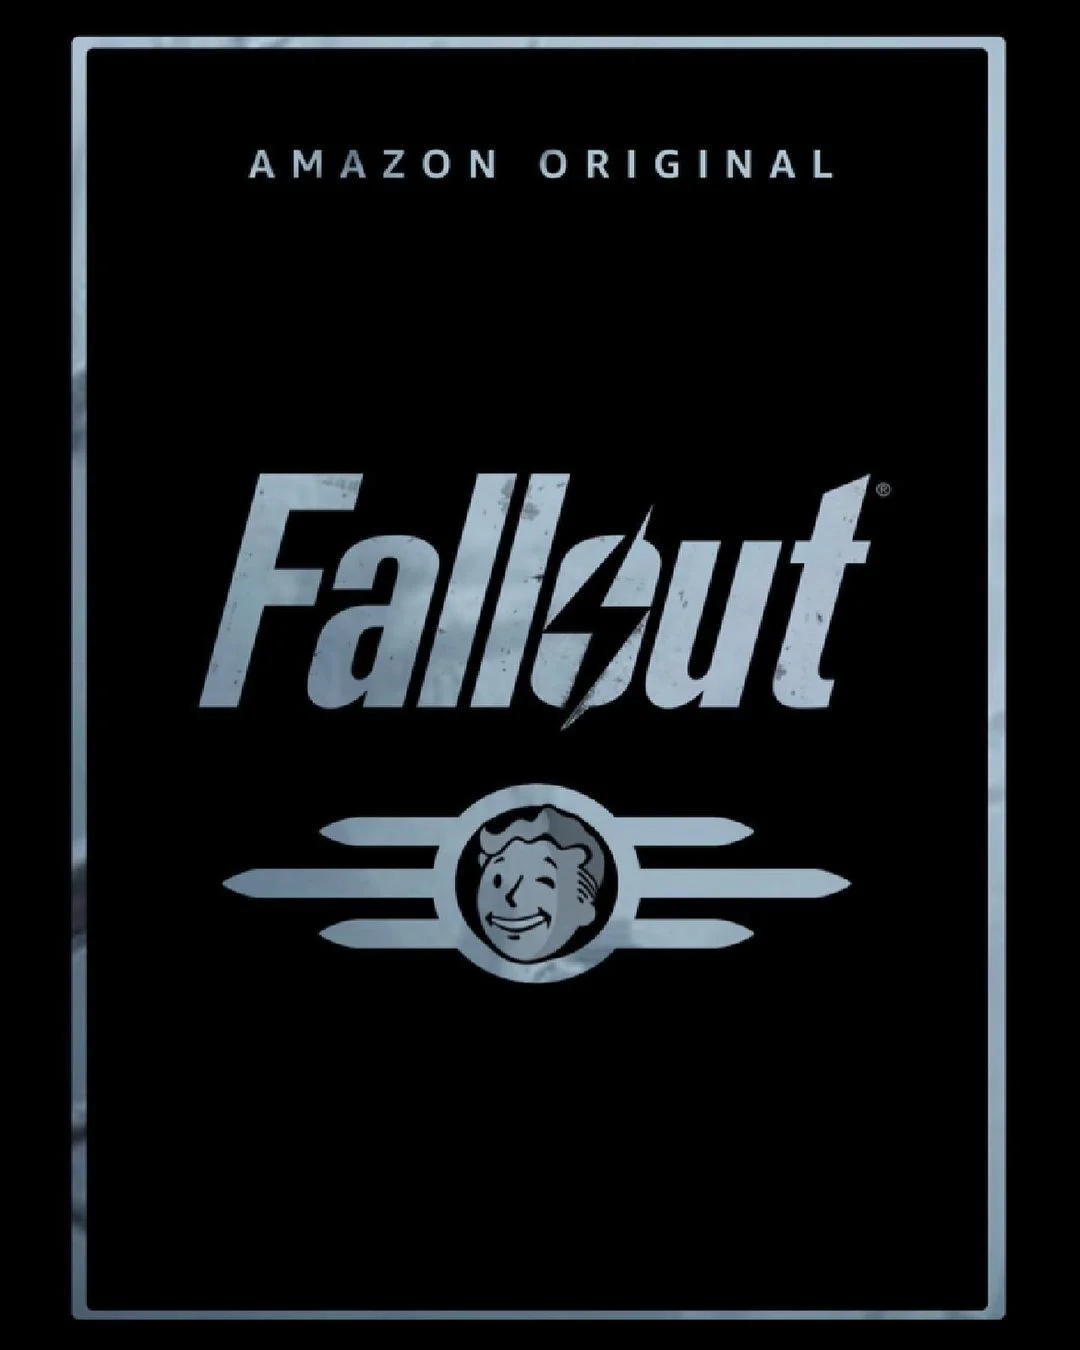 Начались съёмки сериала по мотивам Fallout для Amazon - фото 3